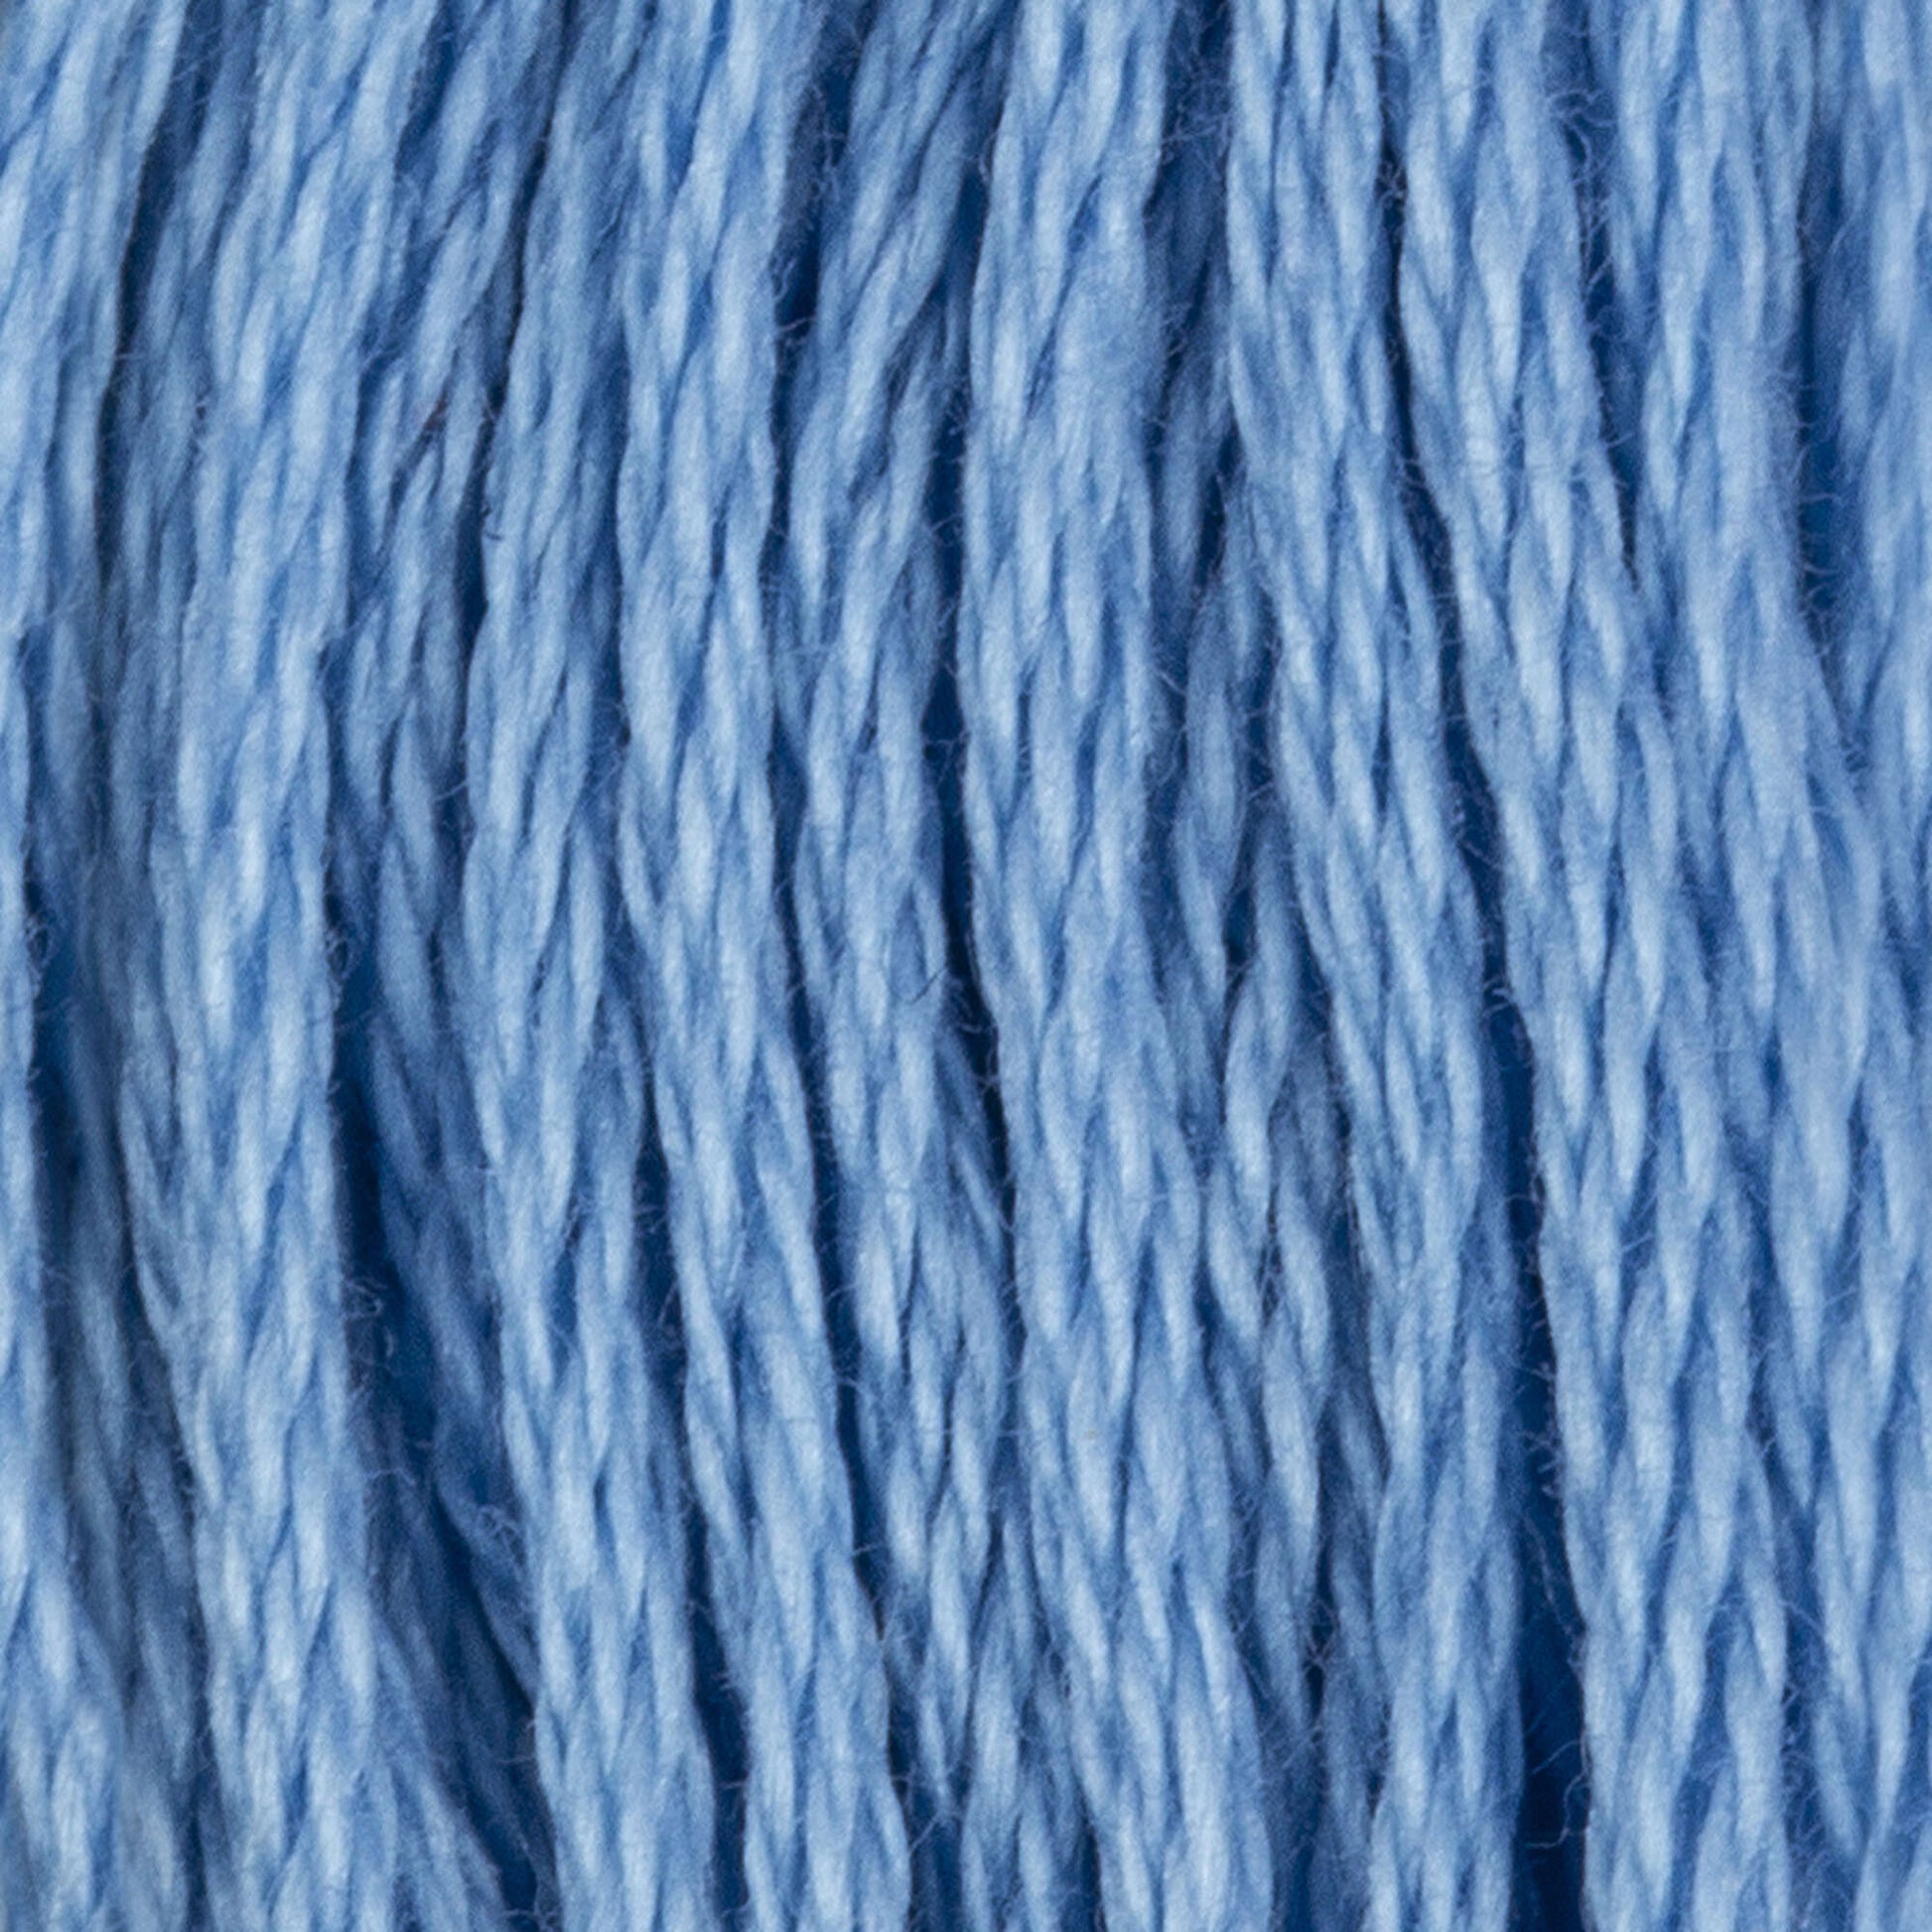 Coats & Clark Cotton Embroidery Floss Blue